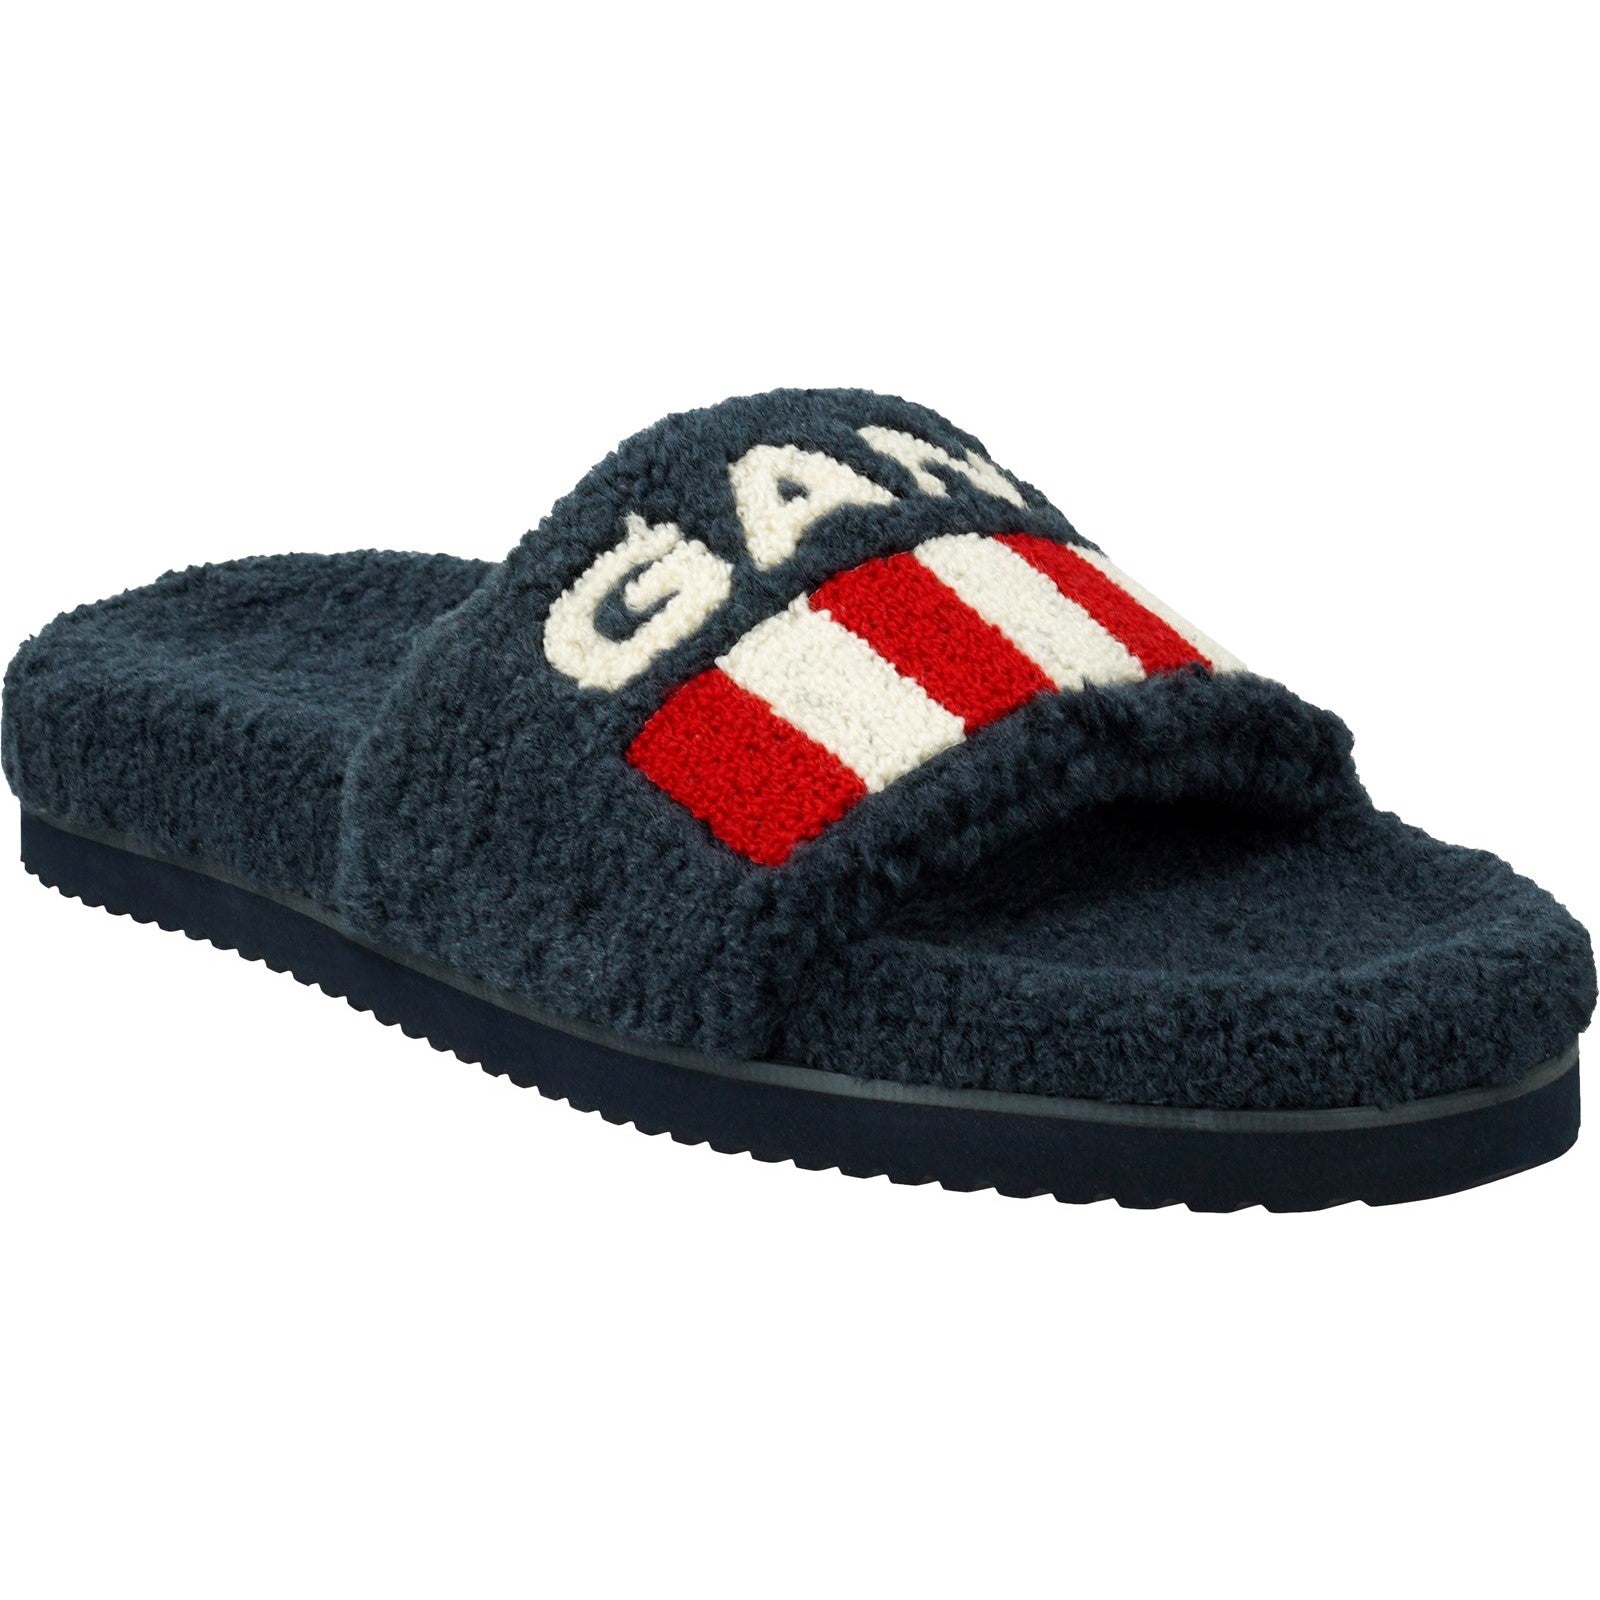 Gant Footwear Miltoon Homeslipper Slippers